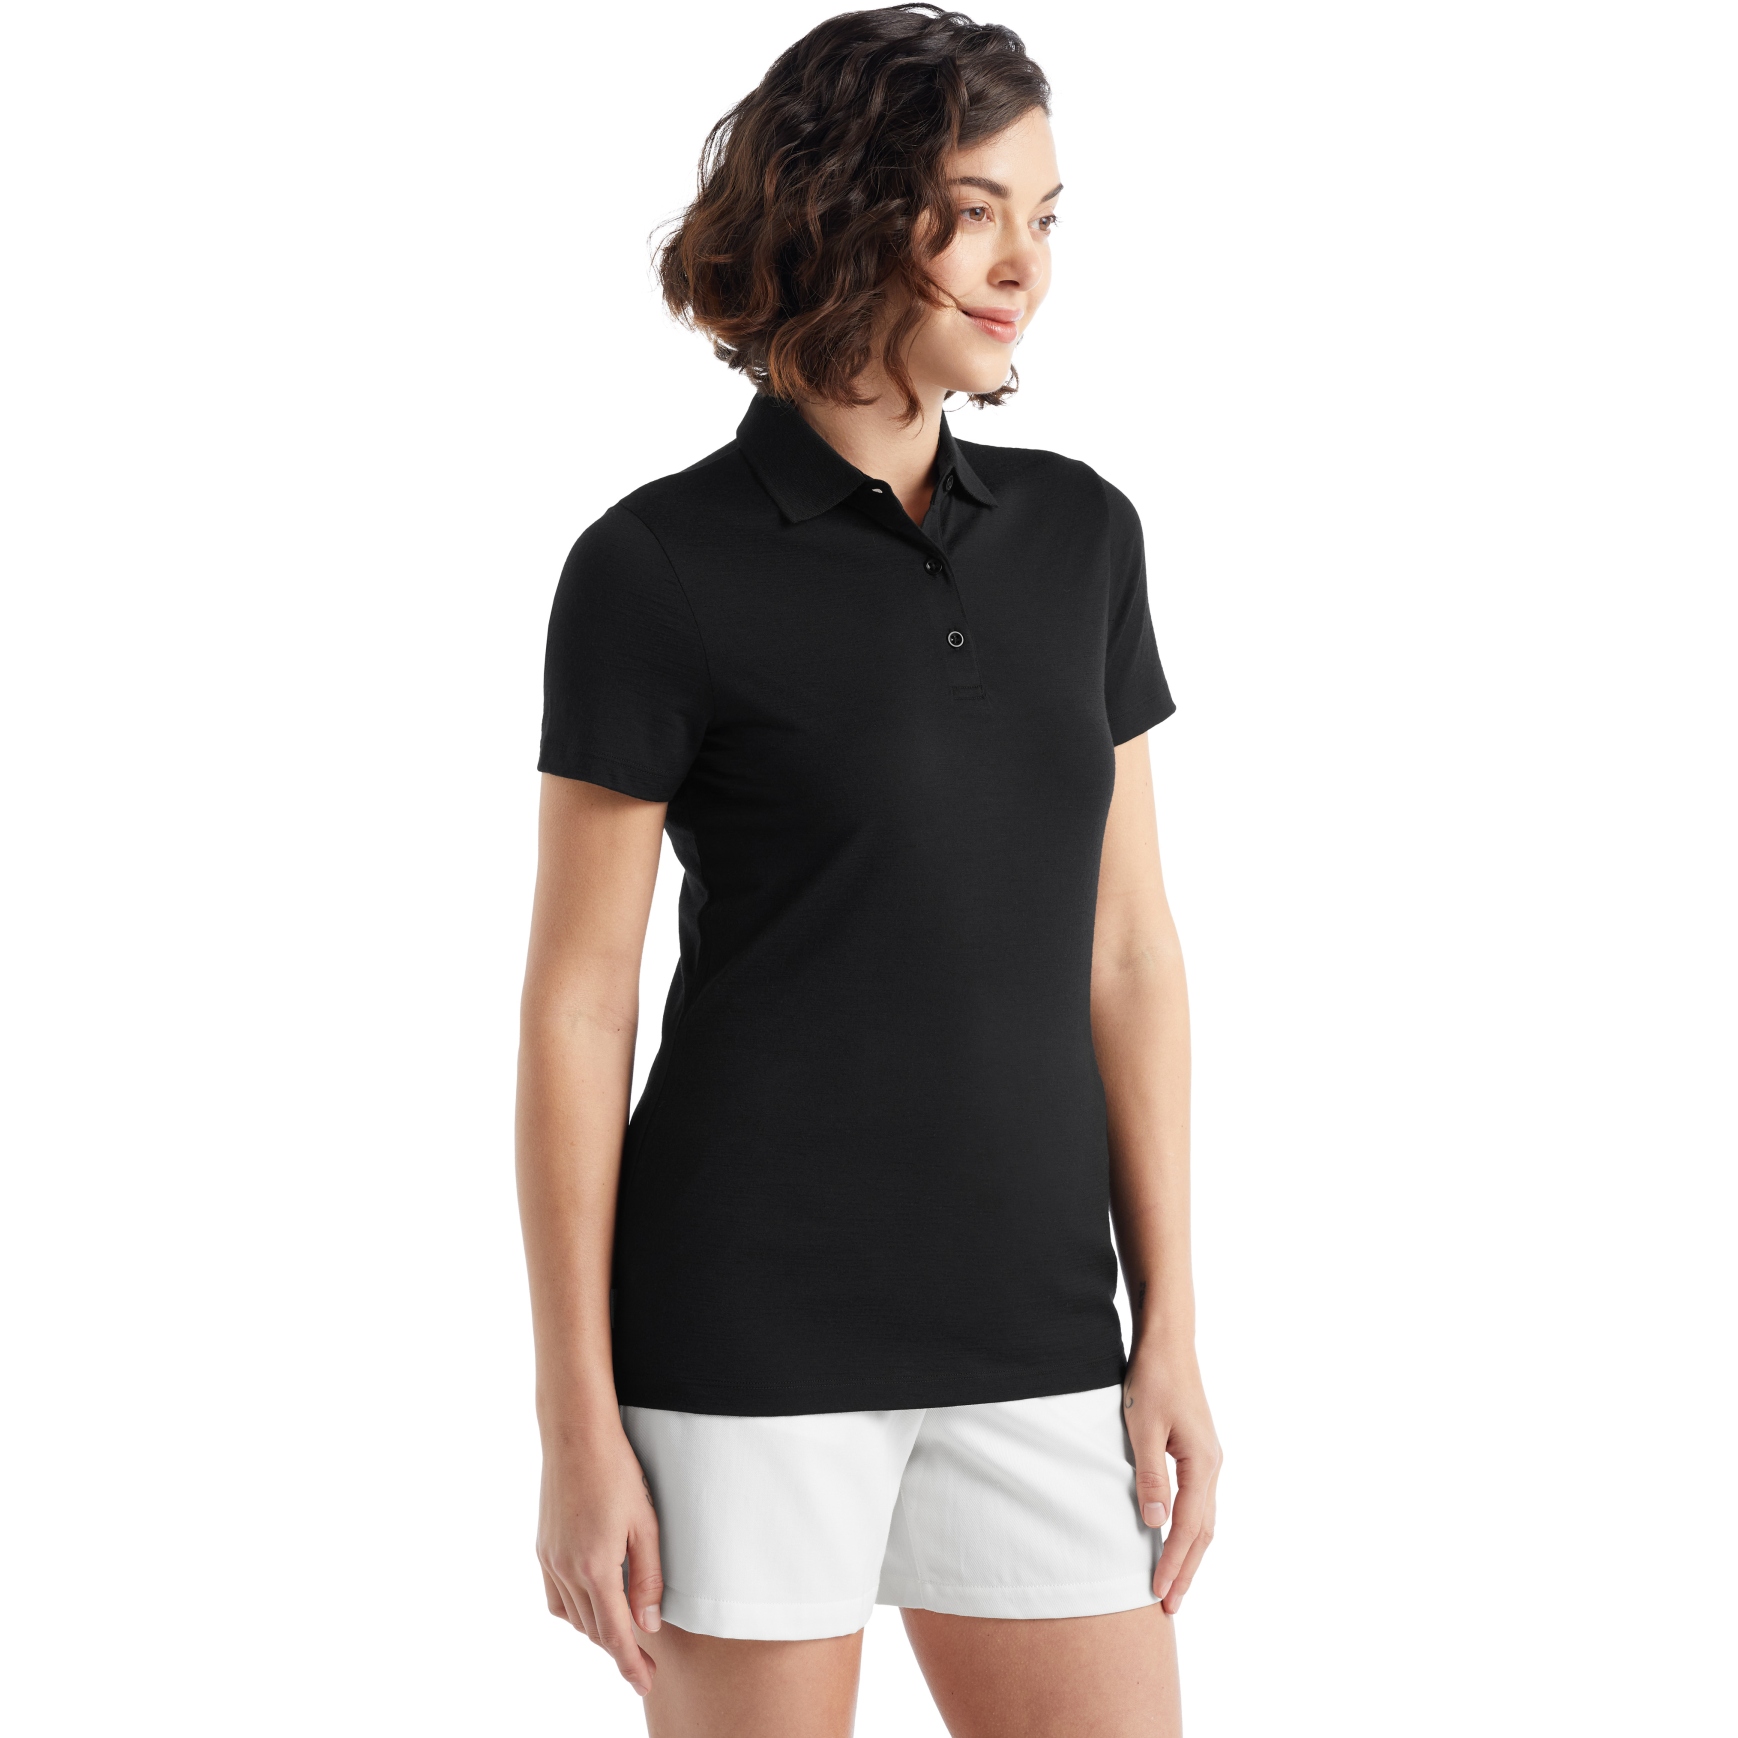 Picture of Icebreaker Tech Lite II Short Sleeve Polo Shirt Women - Black